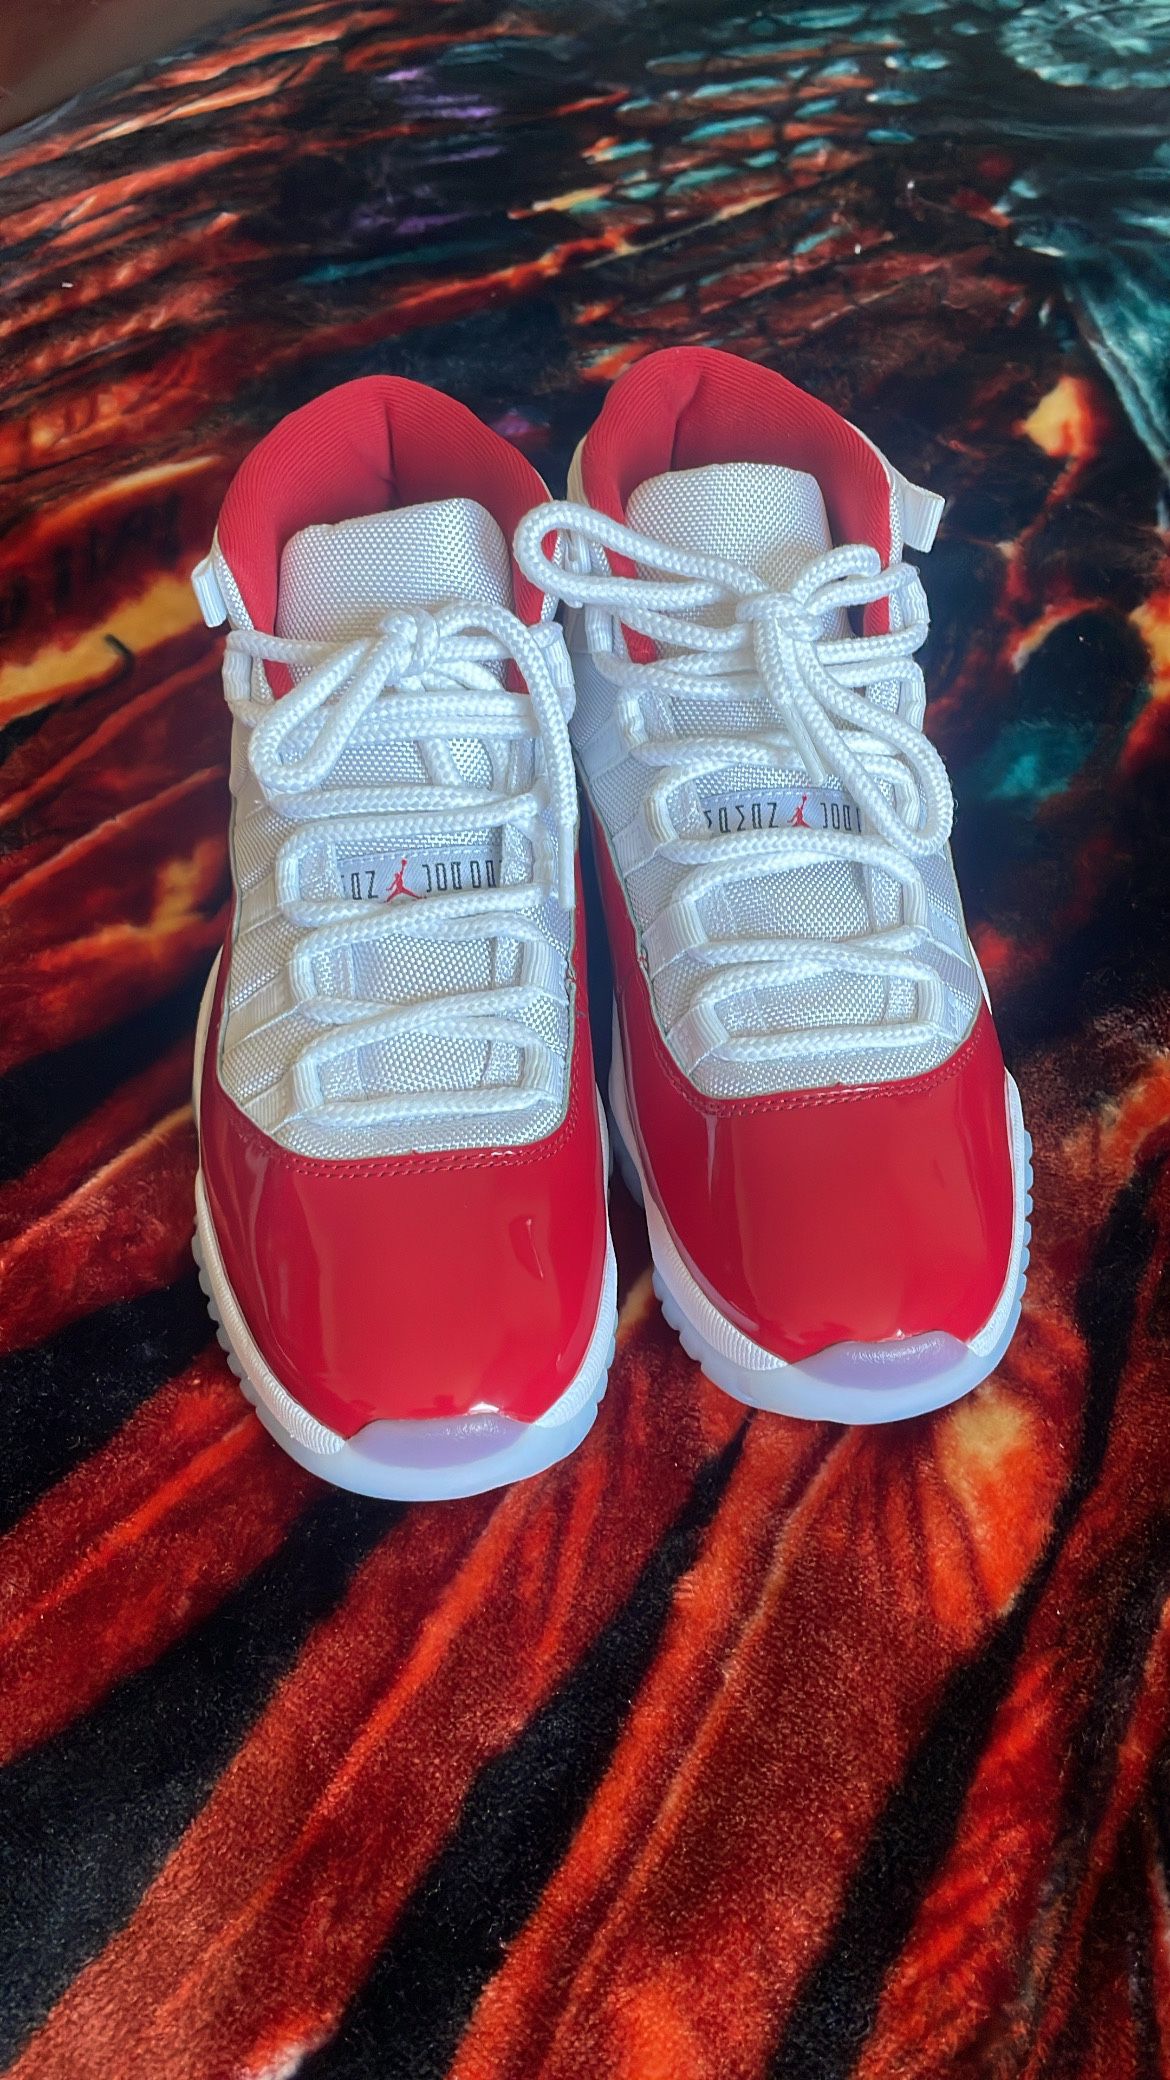 Cherry Red Jordan 11s (7.5)